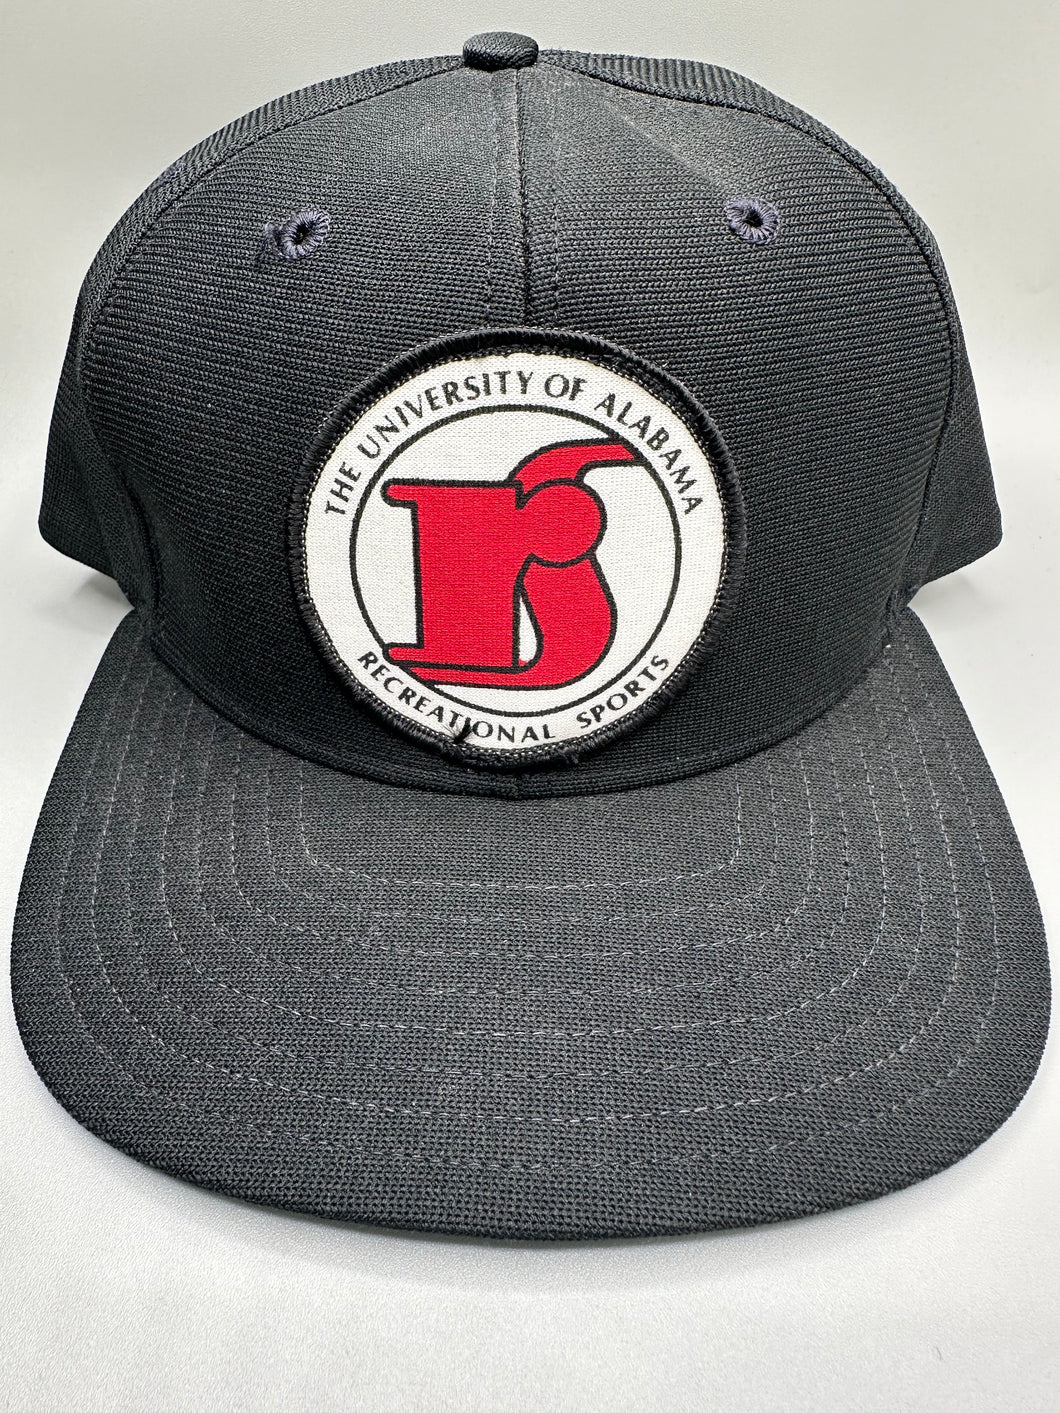 Vintage University of Alabama Rec Sports Snapback Hat